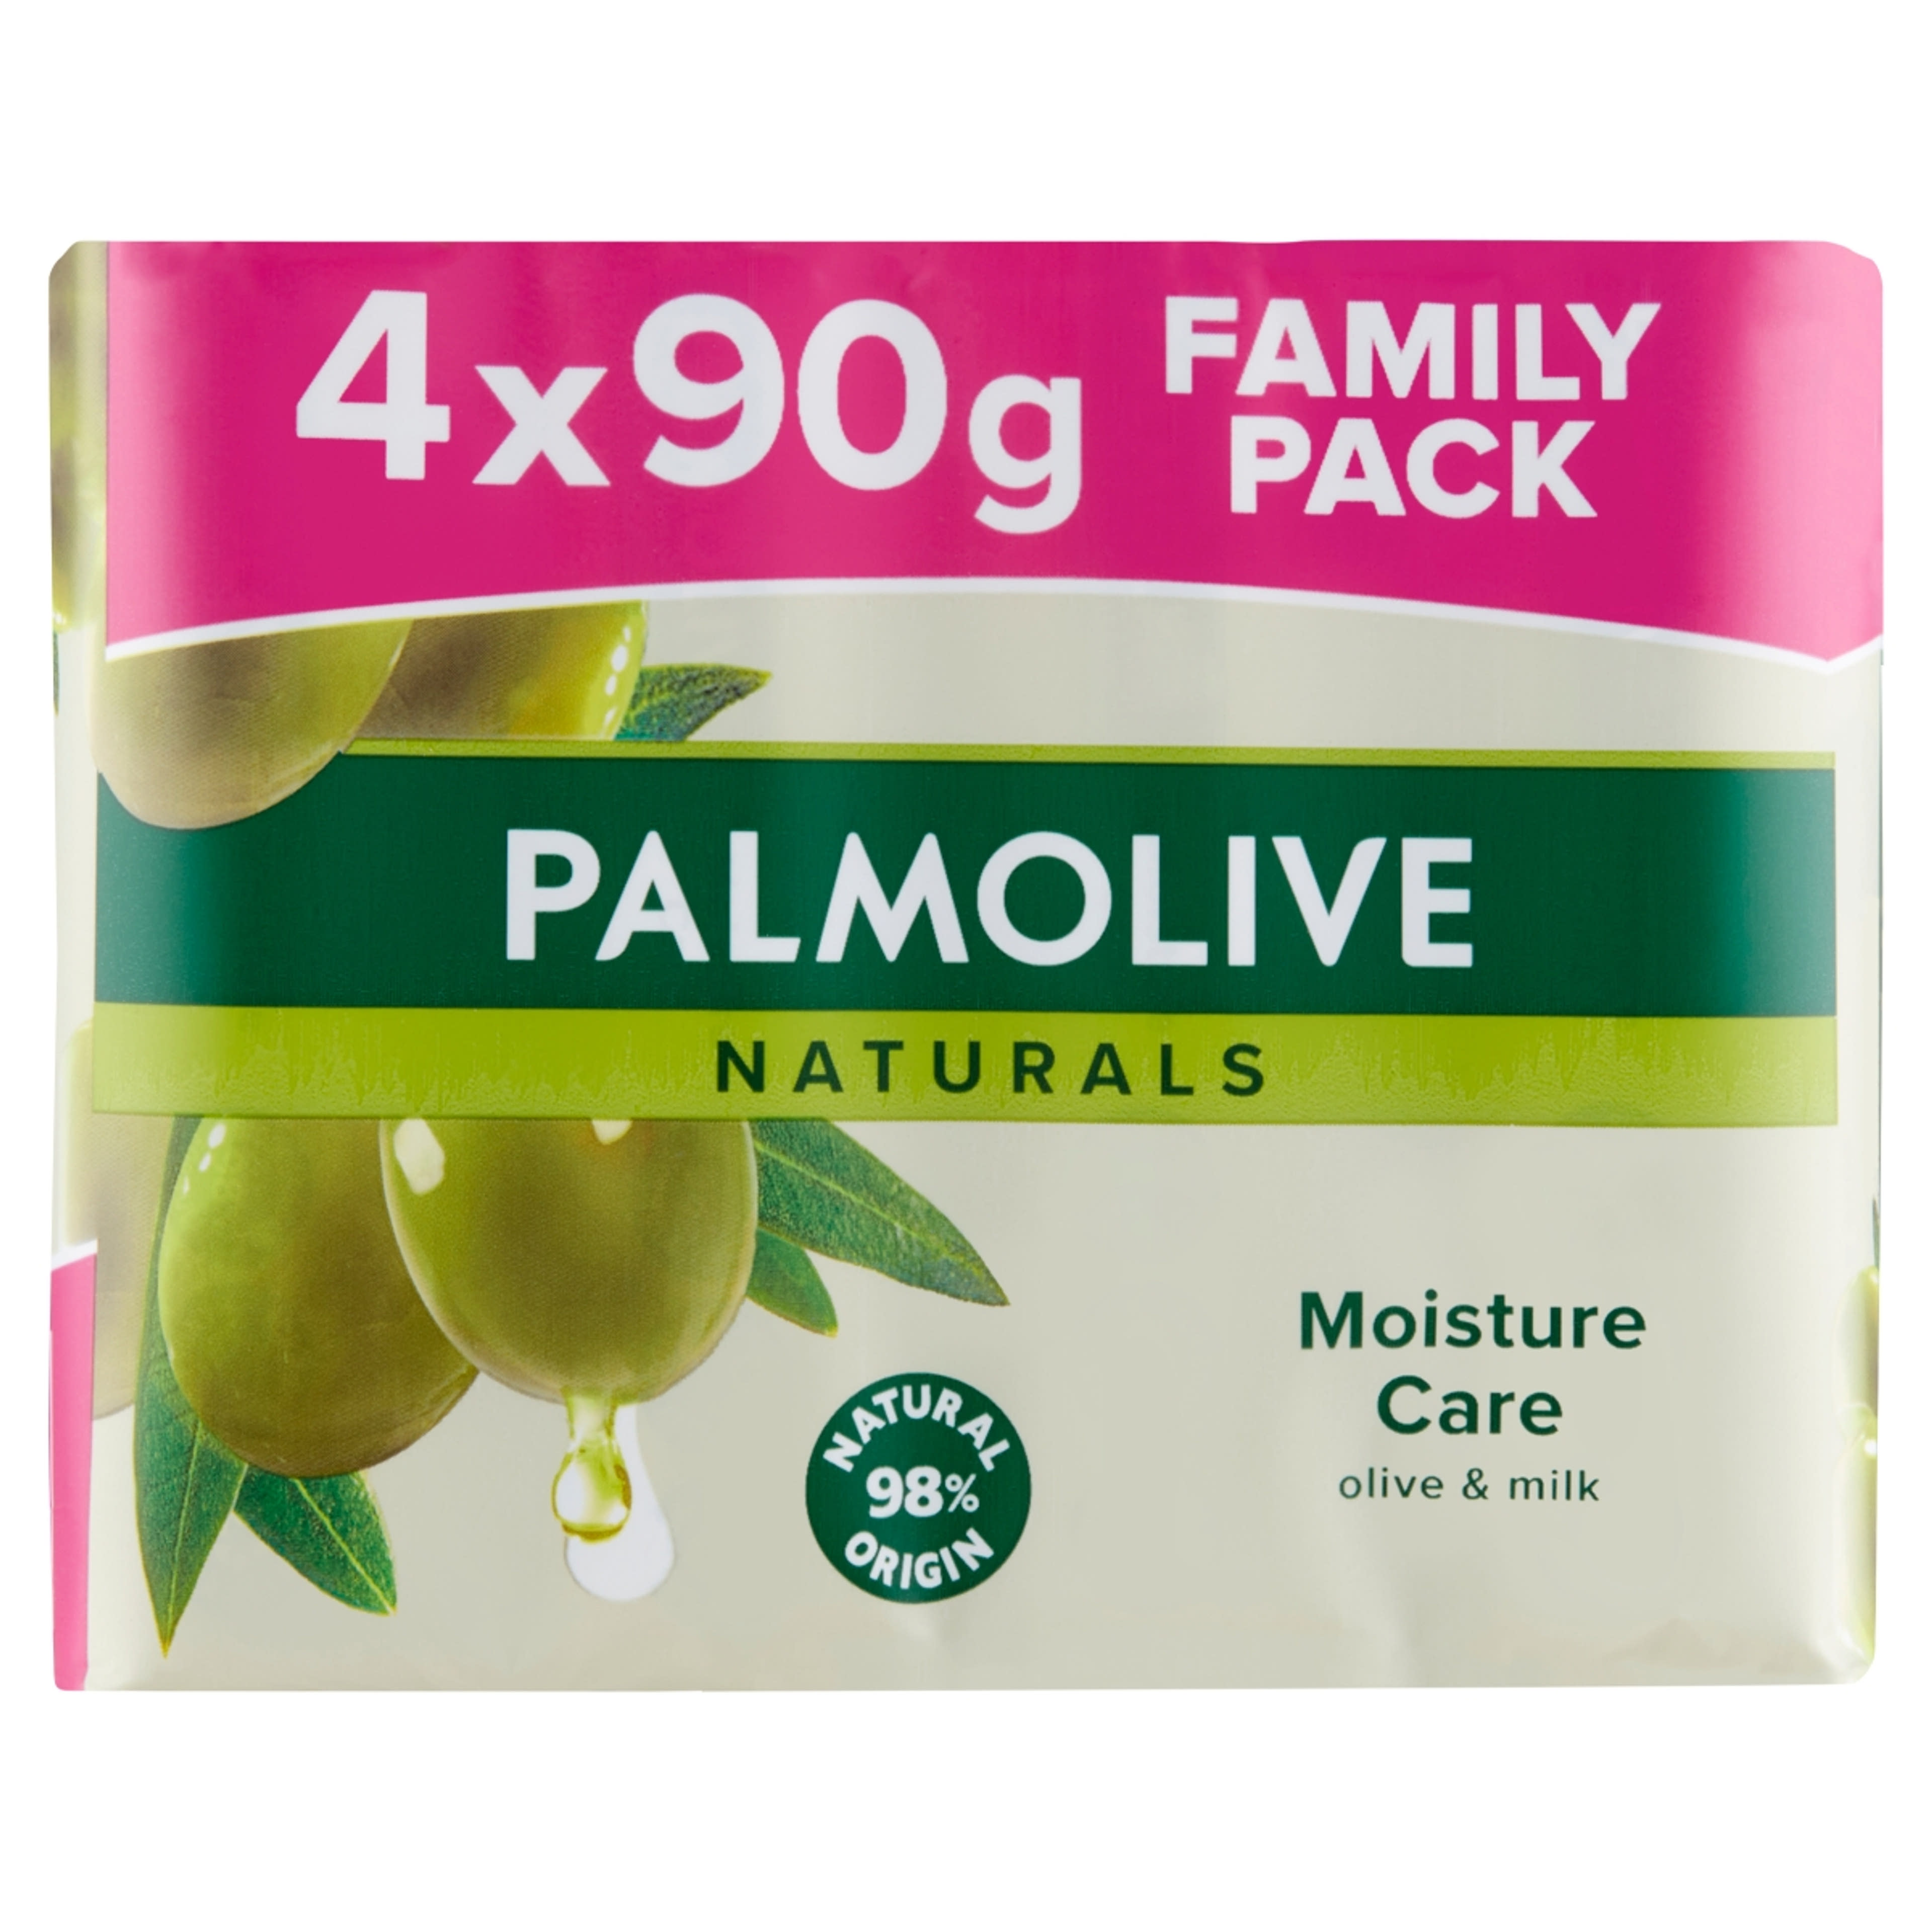 Palmolive Naturals Moisture Care pipereszappan olíva kivonattal 4 x 90 g - 360 g-1